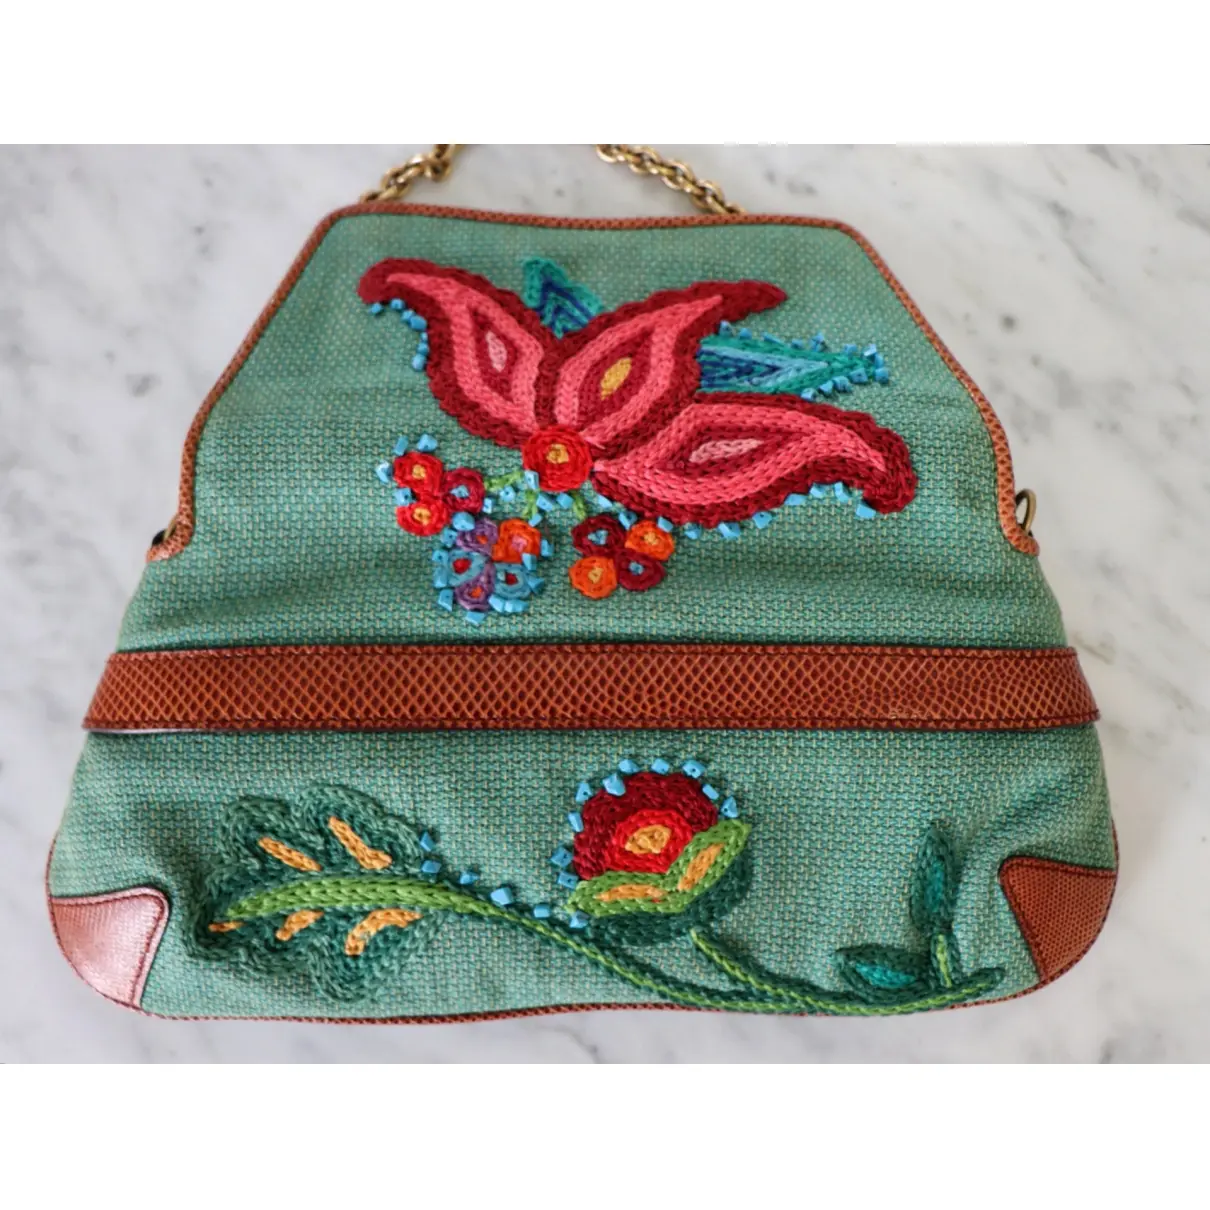 Buy Gucci Lizard clutch bag online